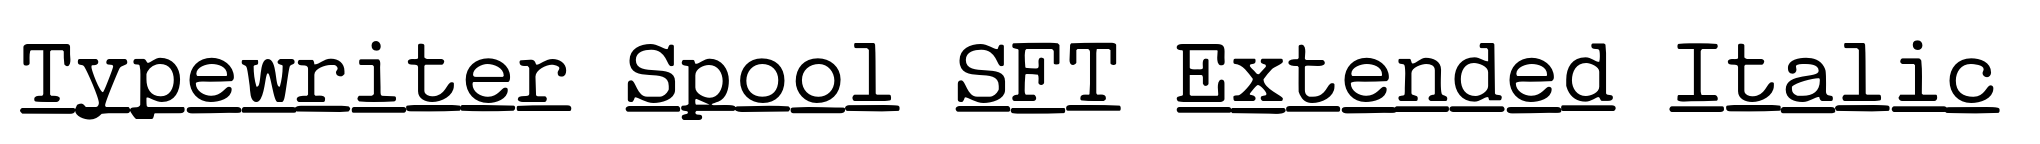 Typewriter Spool SFT Extended Italic image